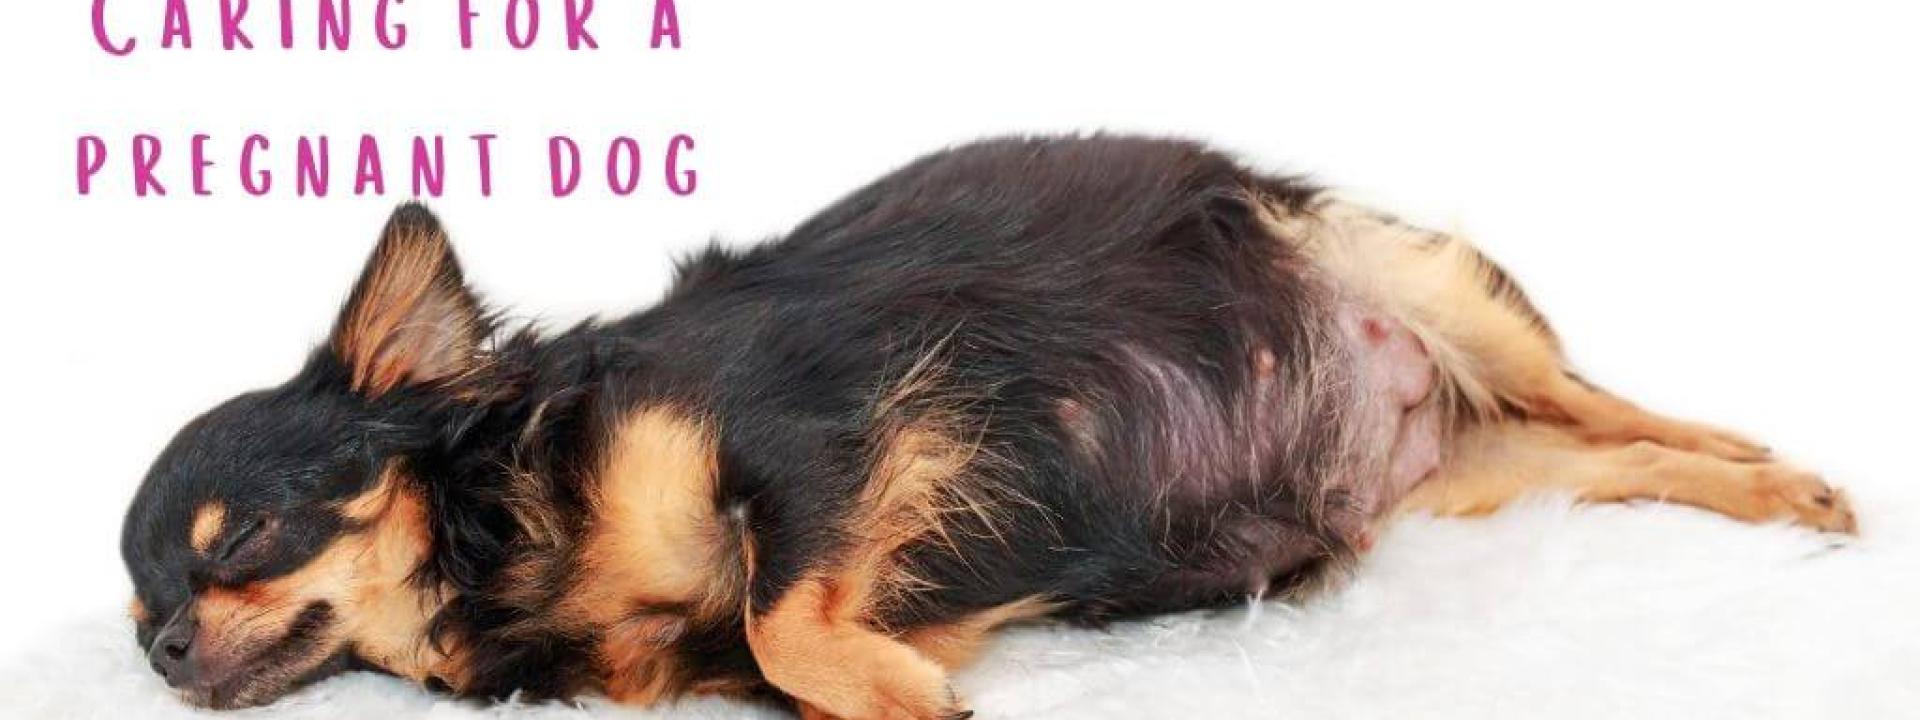 dog-pregnancy-care-blog-header.jpg